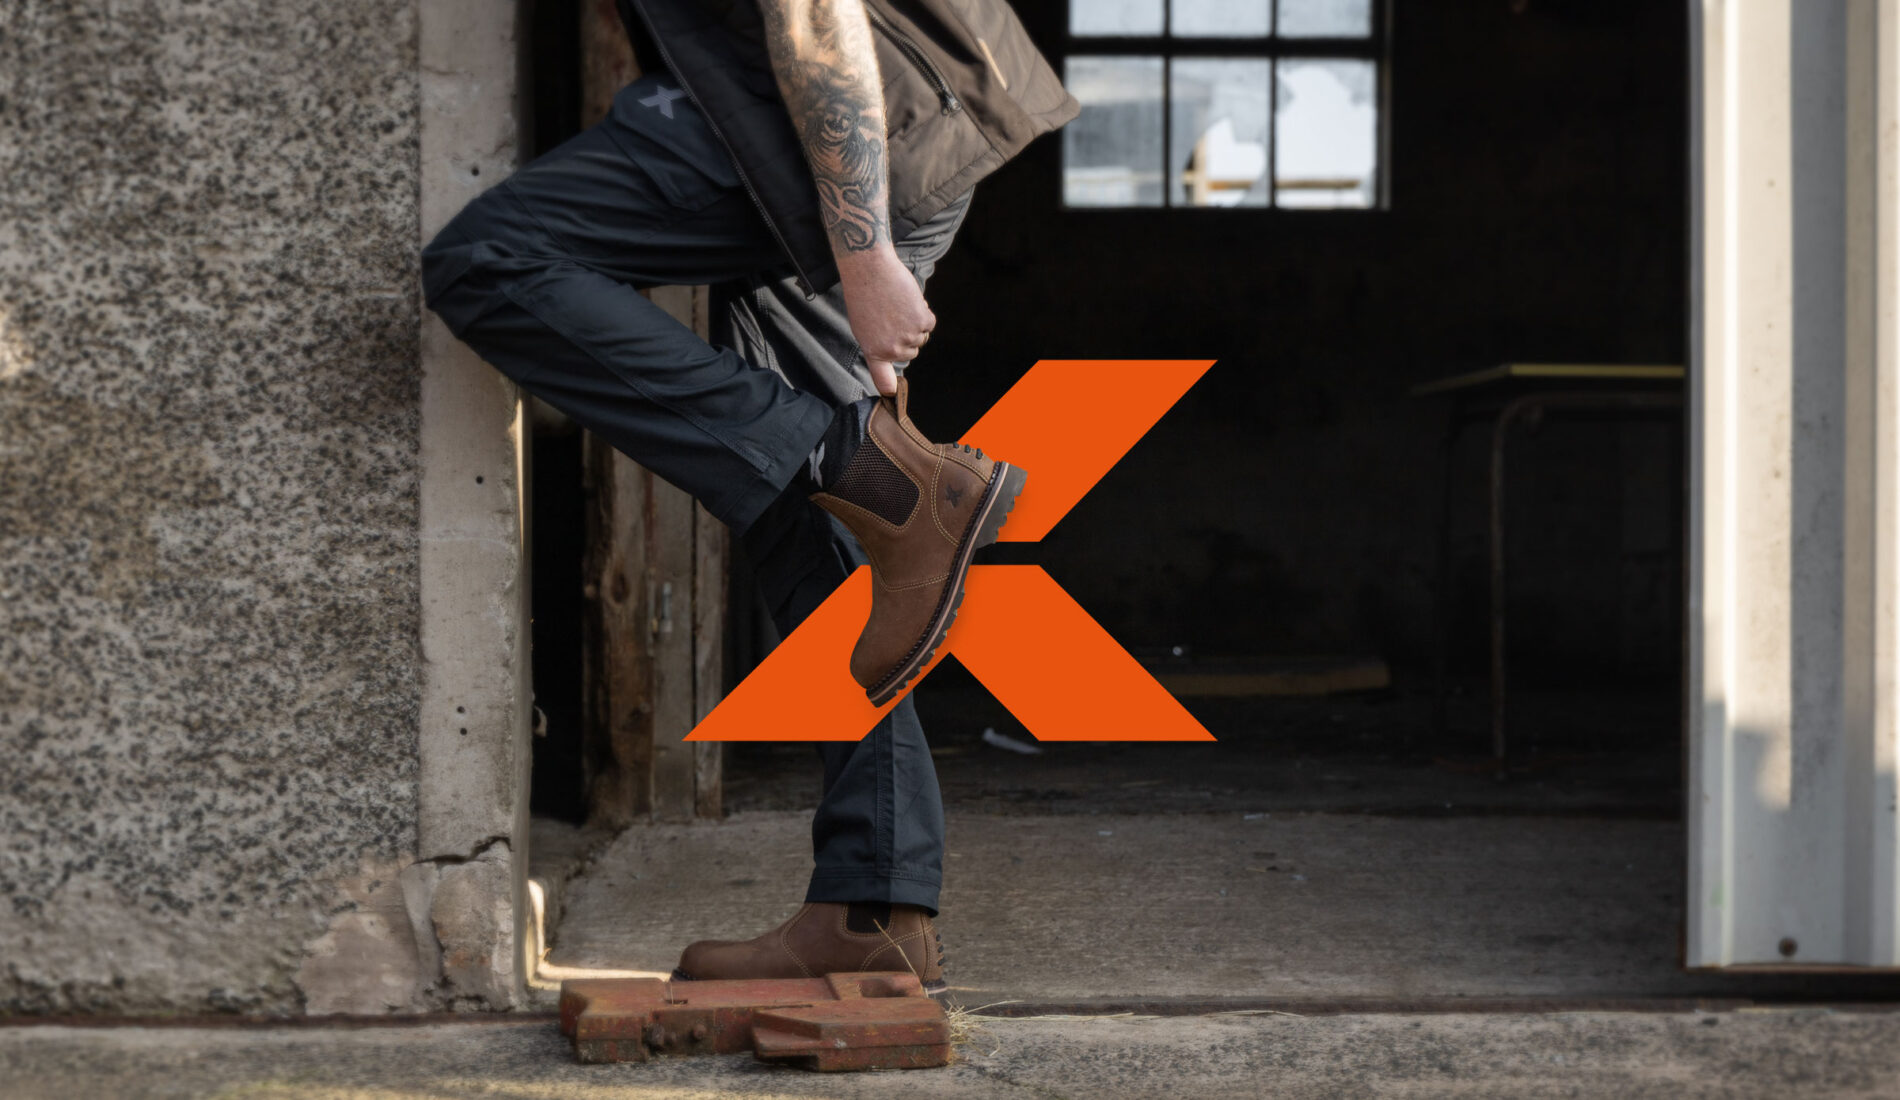 Xpert Workwear website designed by web design agency London, Fhoke for Belfast, Ireland outdoor clothing brand.